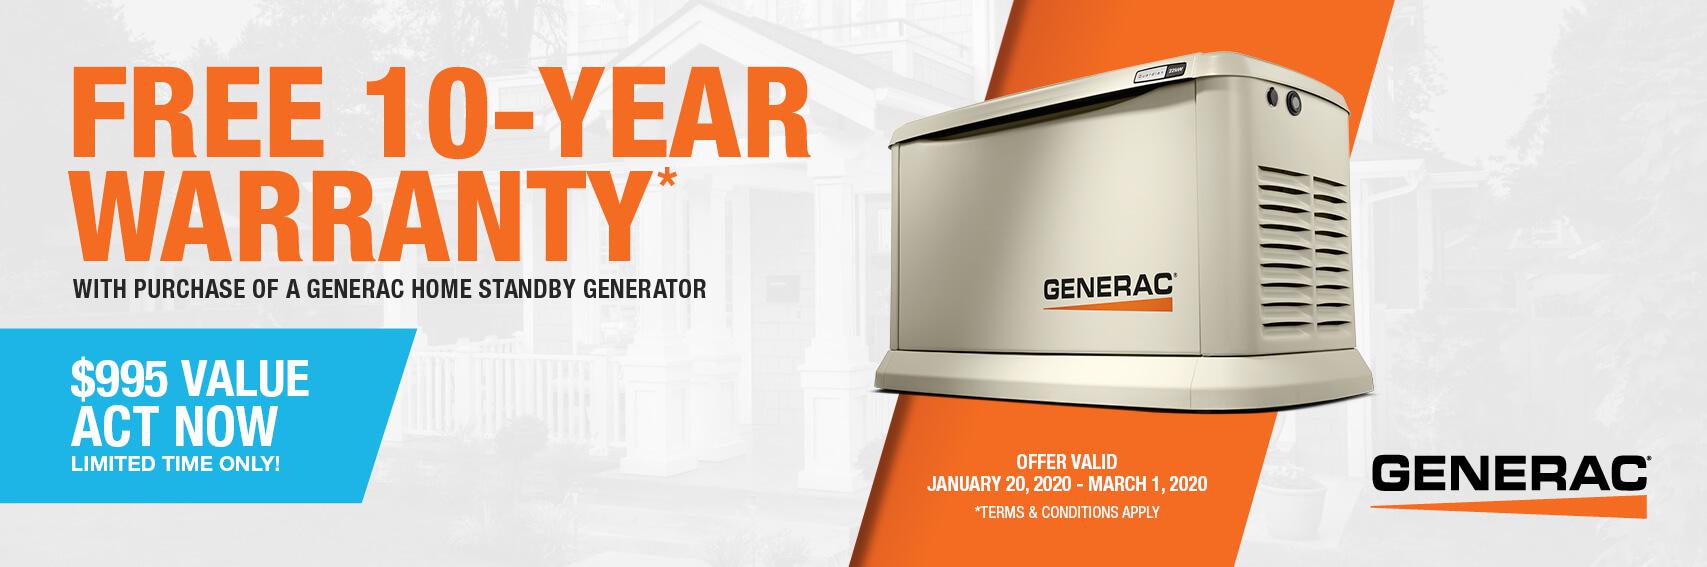 Homestandby Generator Deal | Warranty Offer | Generac Dealer | Chardon, OH